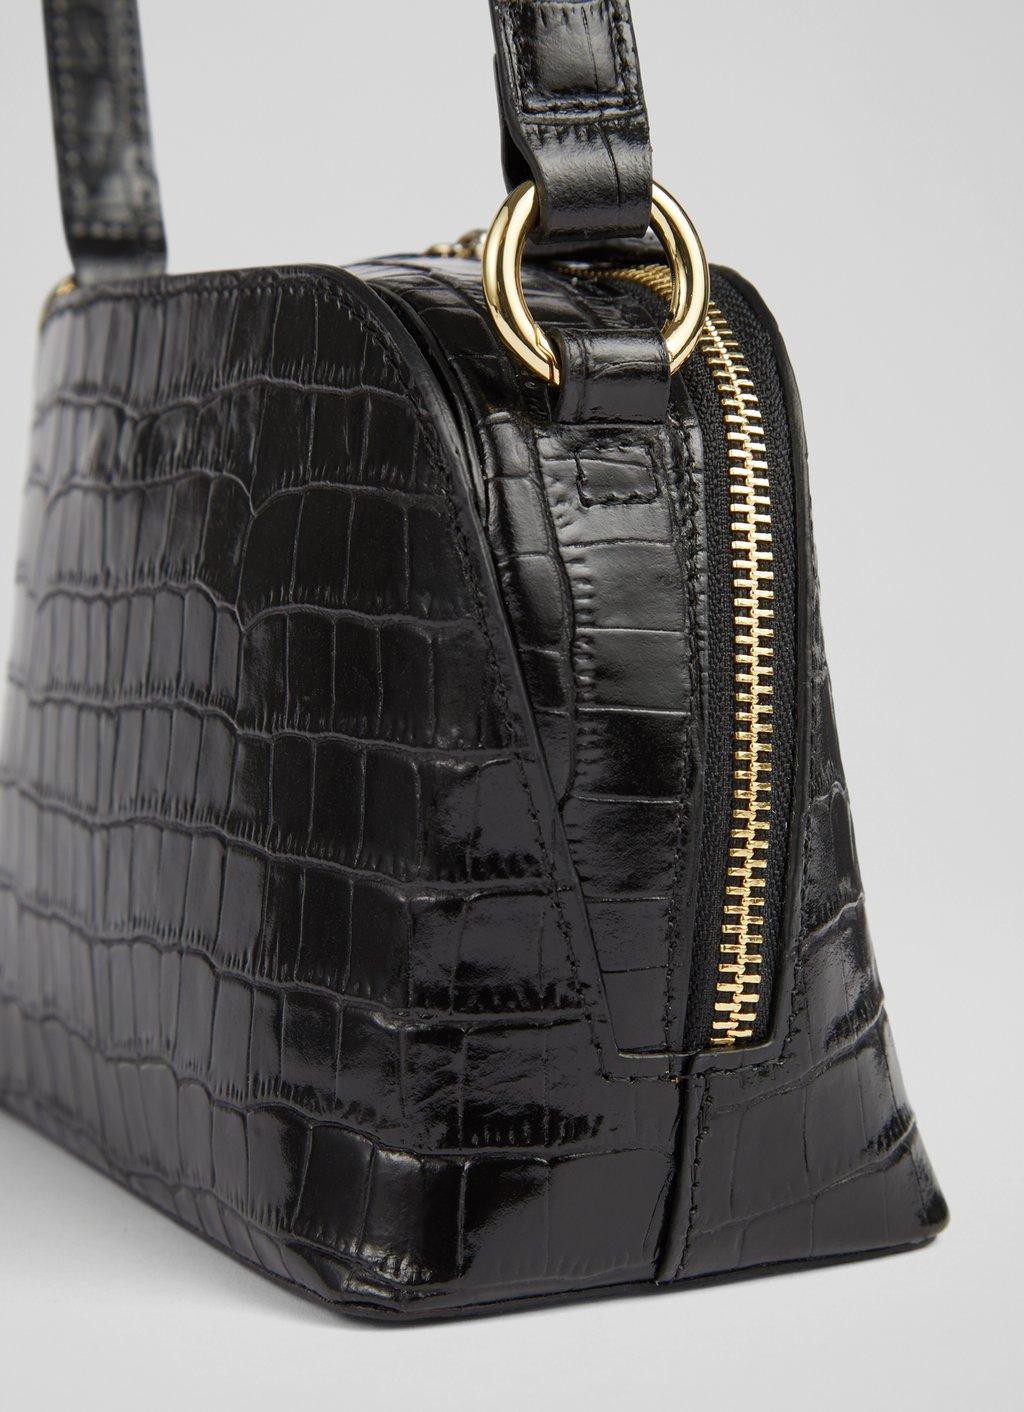 Womens Cool Faux Patent Leather Cross-Body Shoulder Bag Handbag Medium Size